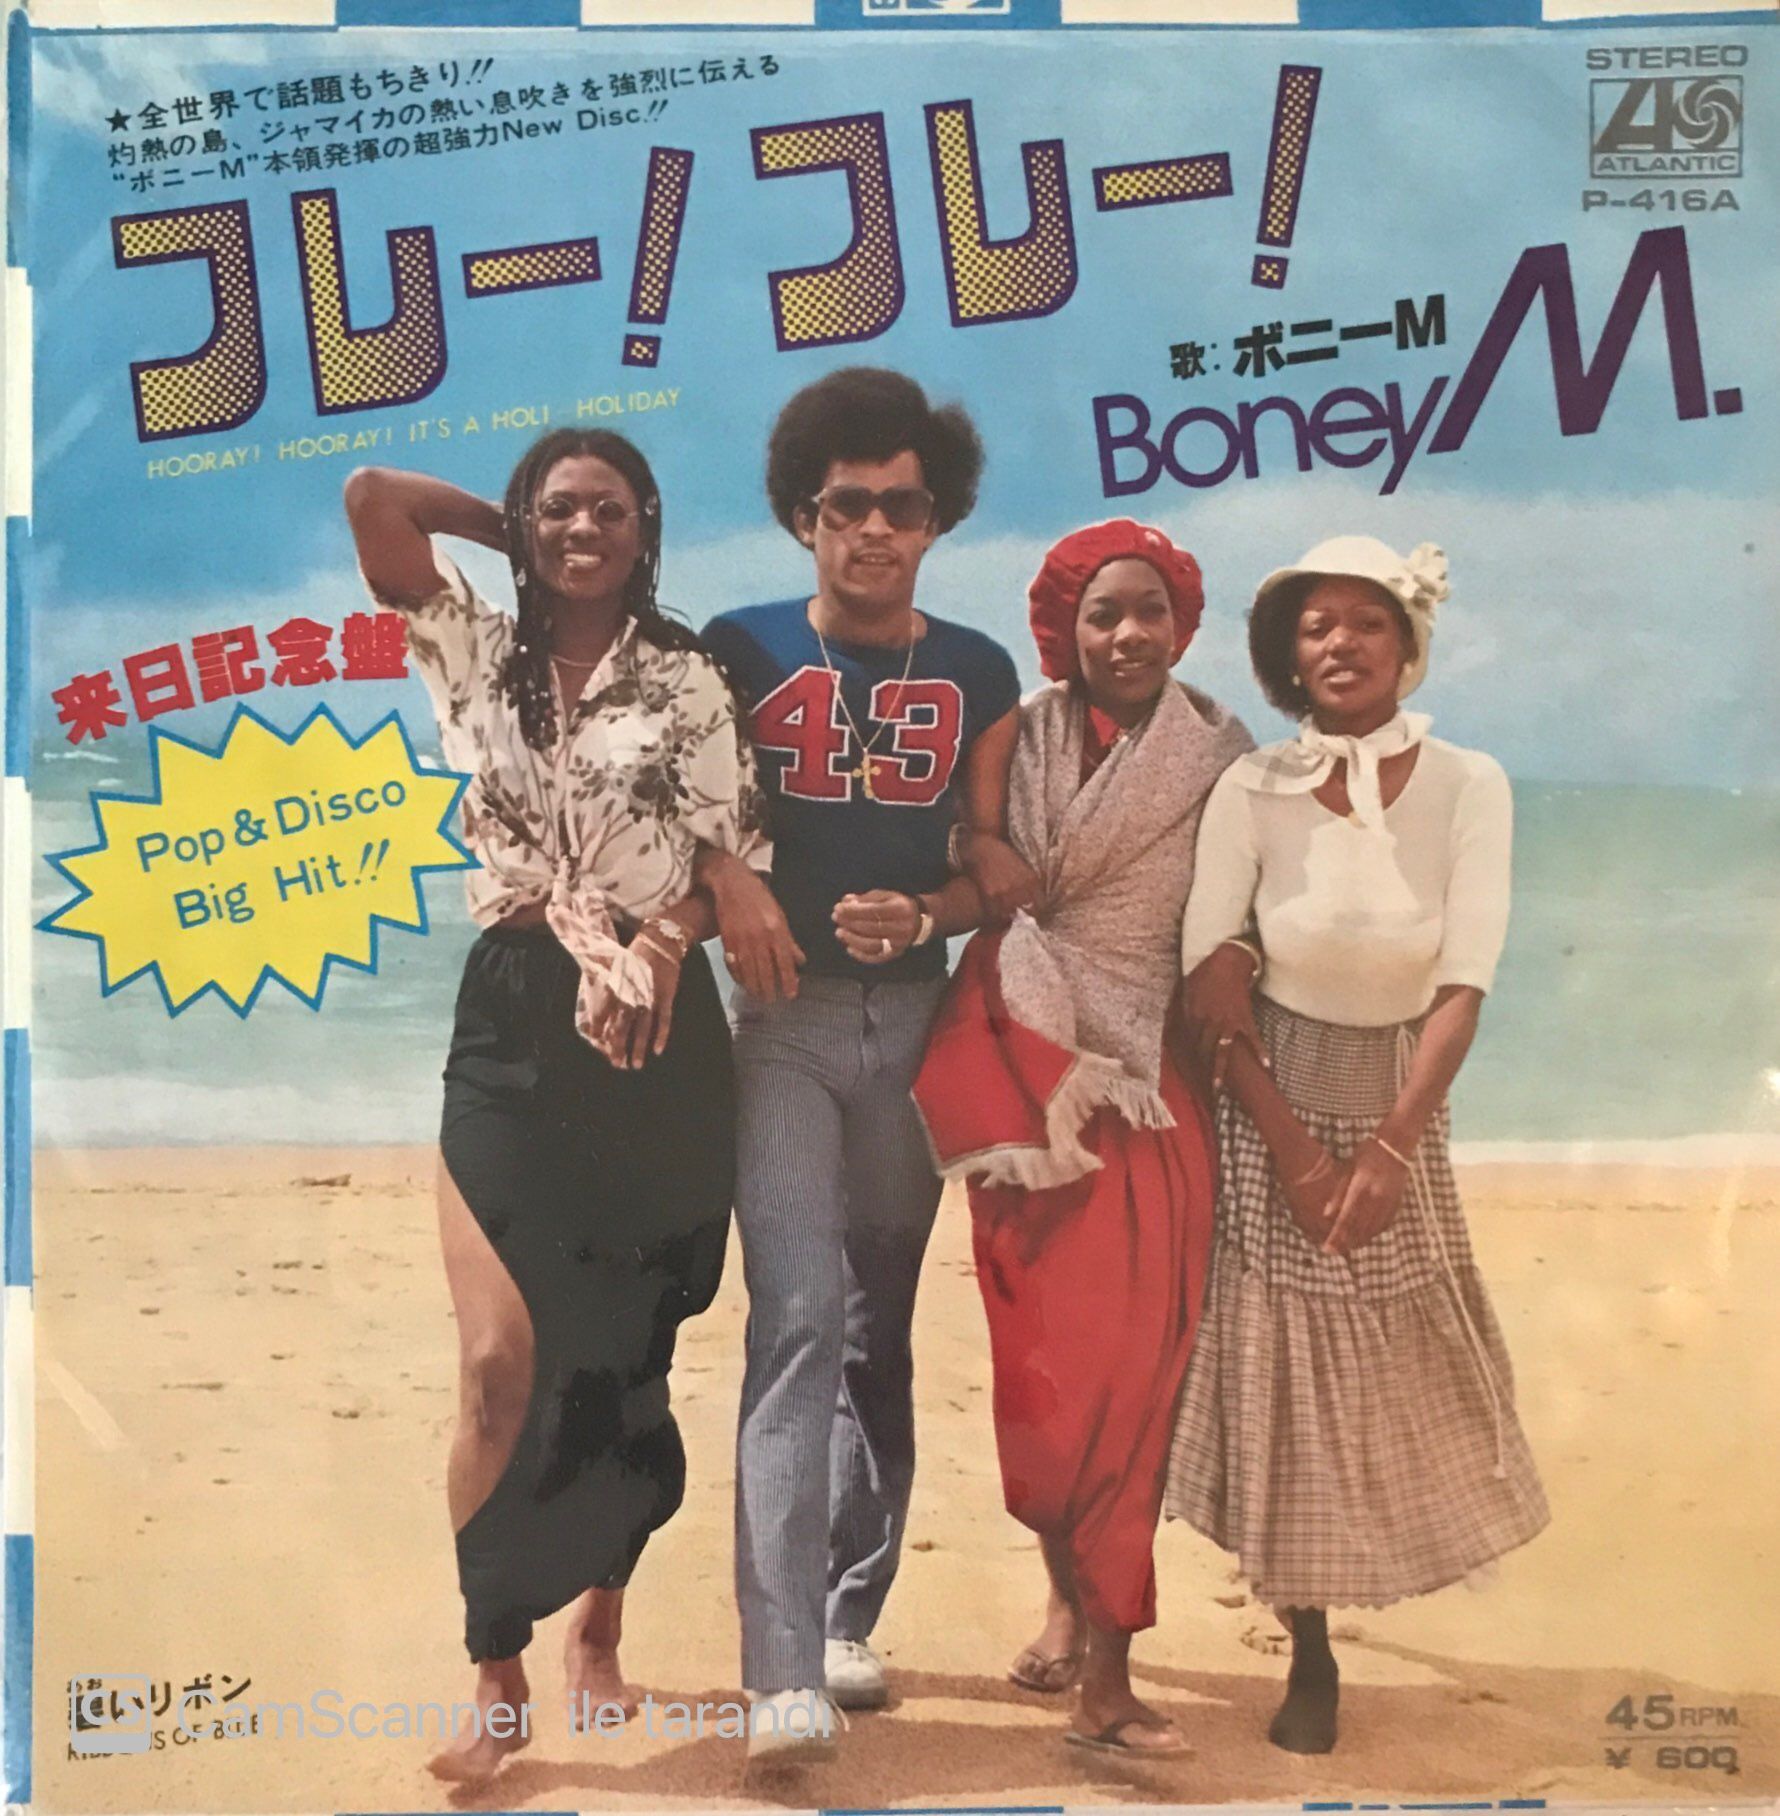 Boney m 320. Группа Boney m.. Hooray! Hooray! It's a Holi-Holiday Boney m.. Boney m 1979. Boney m in Concert 1979.